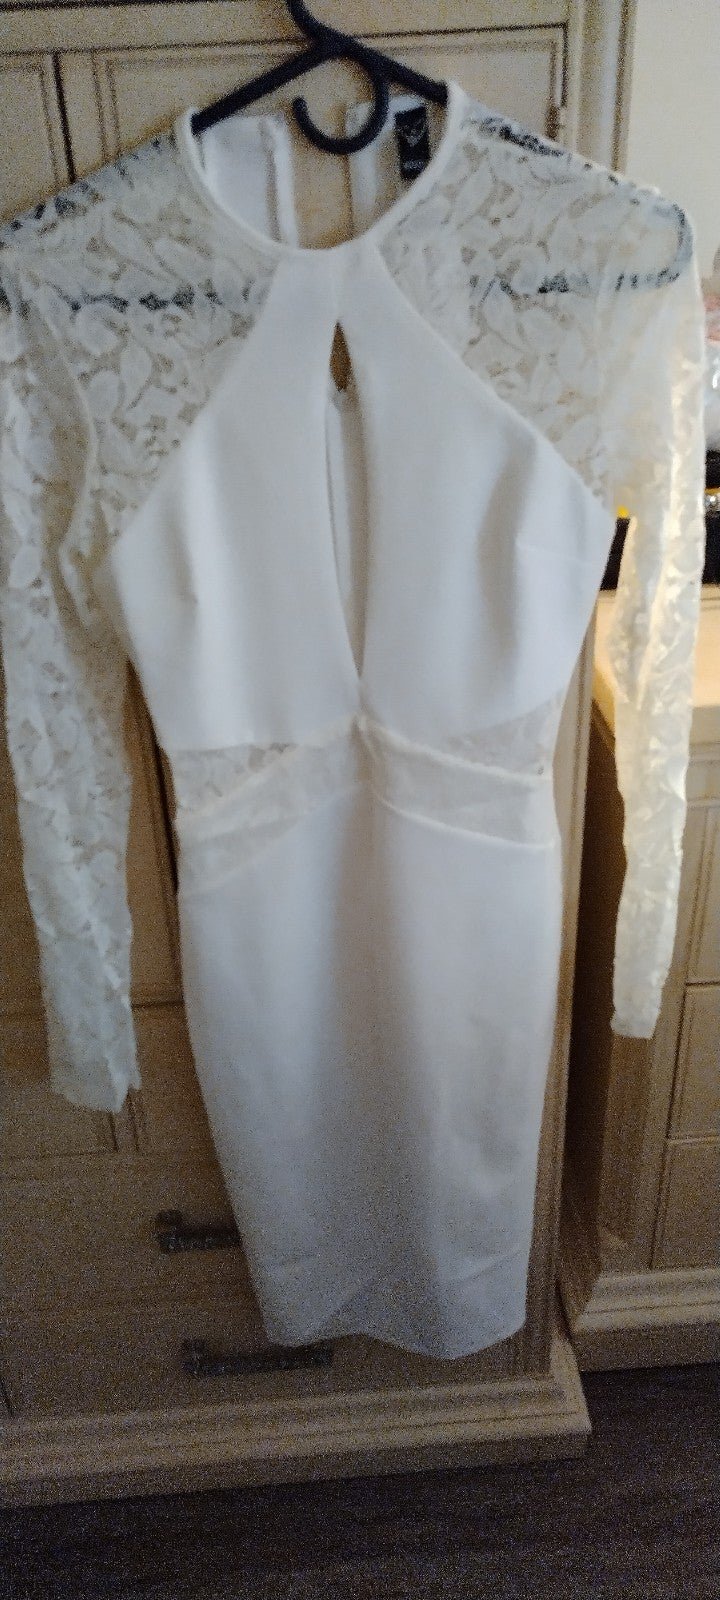 New women white dress size S by Windsor 71YBIFWTL